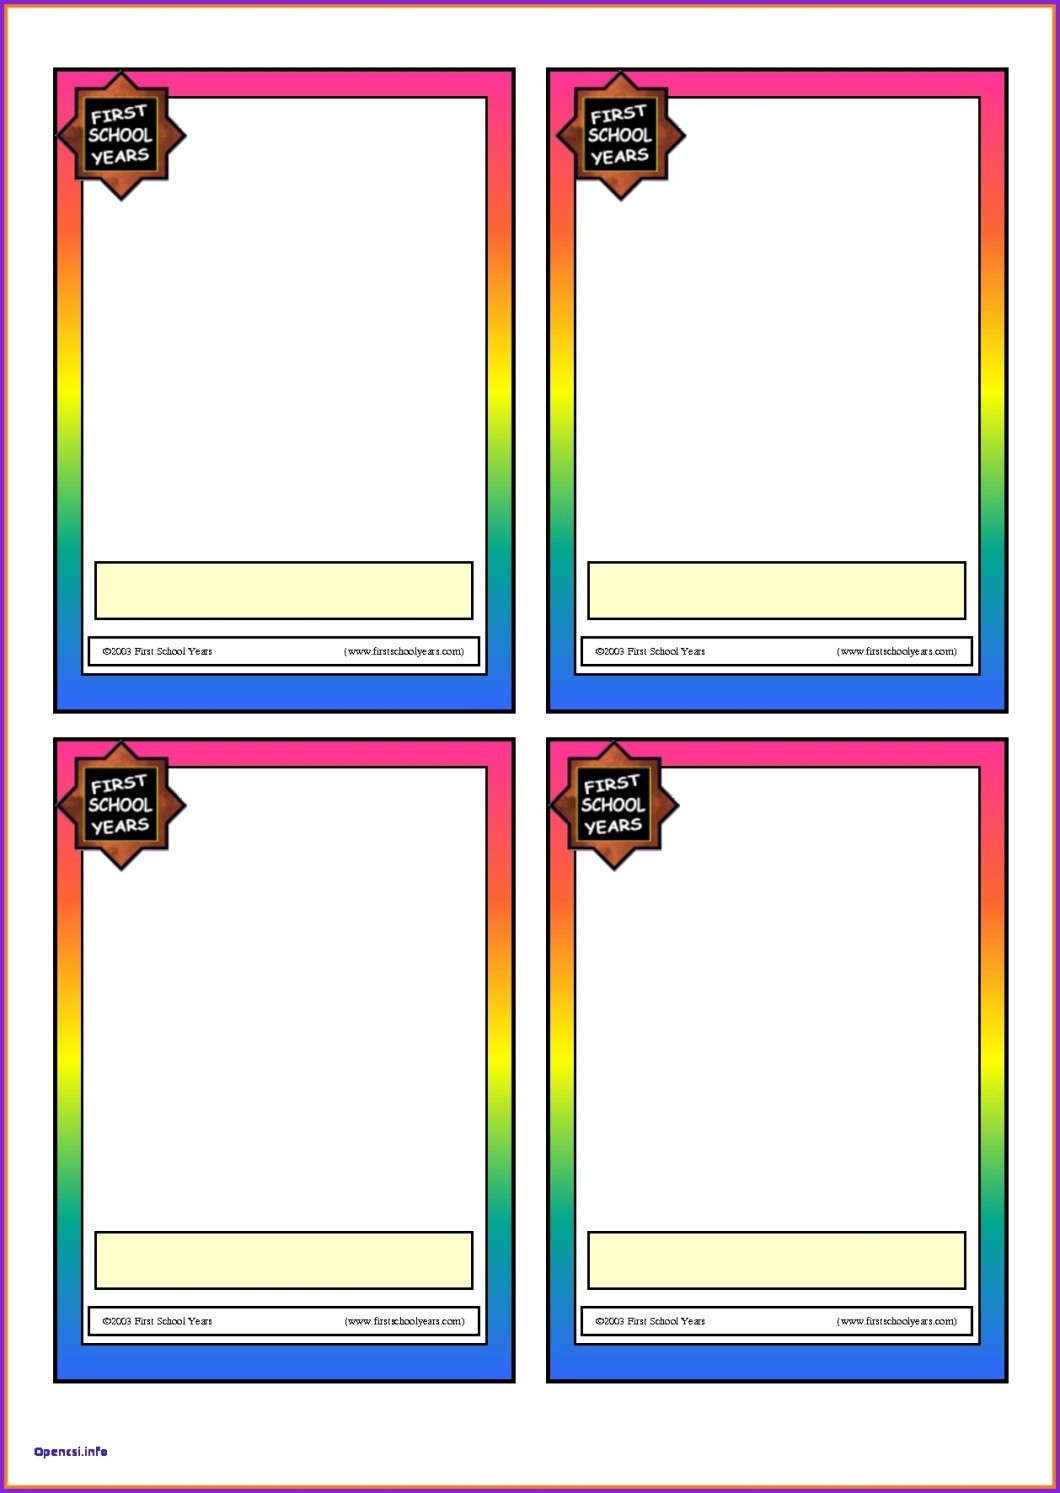 Printable Blank Flash Cards Cardjdi Org Flashcards In Free Printable Blank Flash Cards Template